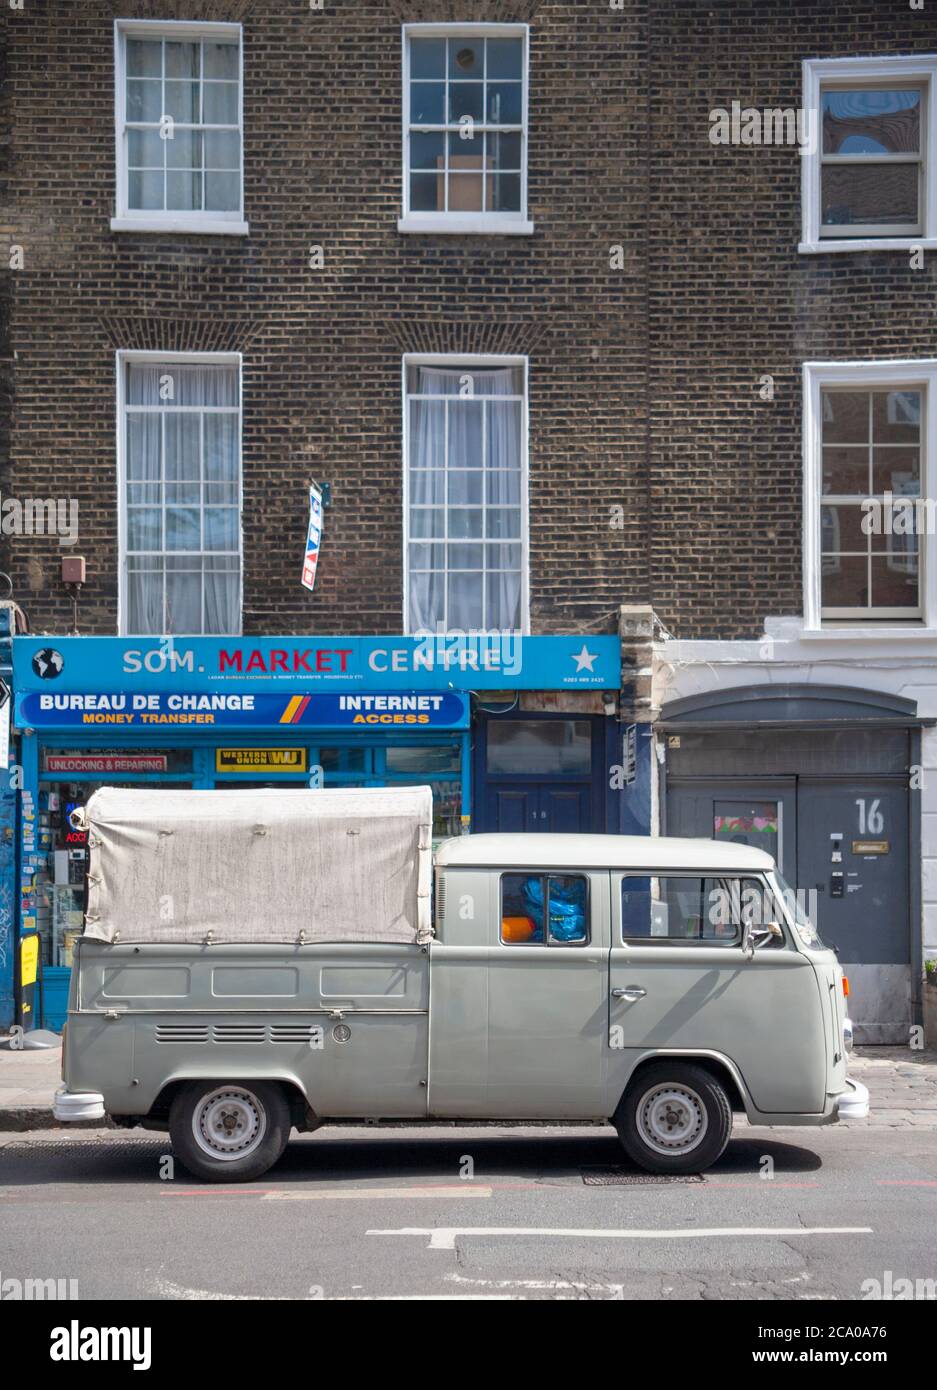 Converted, vintage Volkswagen camper van parked on a road in Camden, west London. England, U.K Photo -